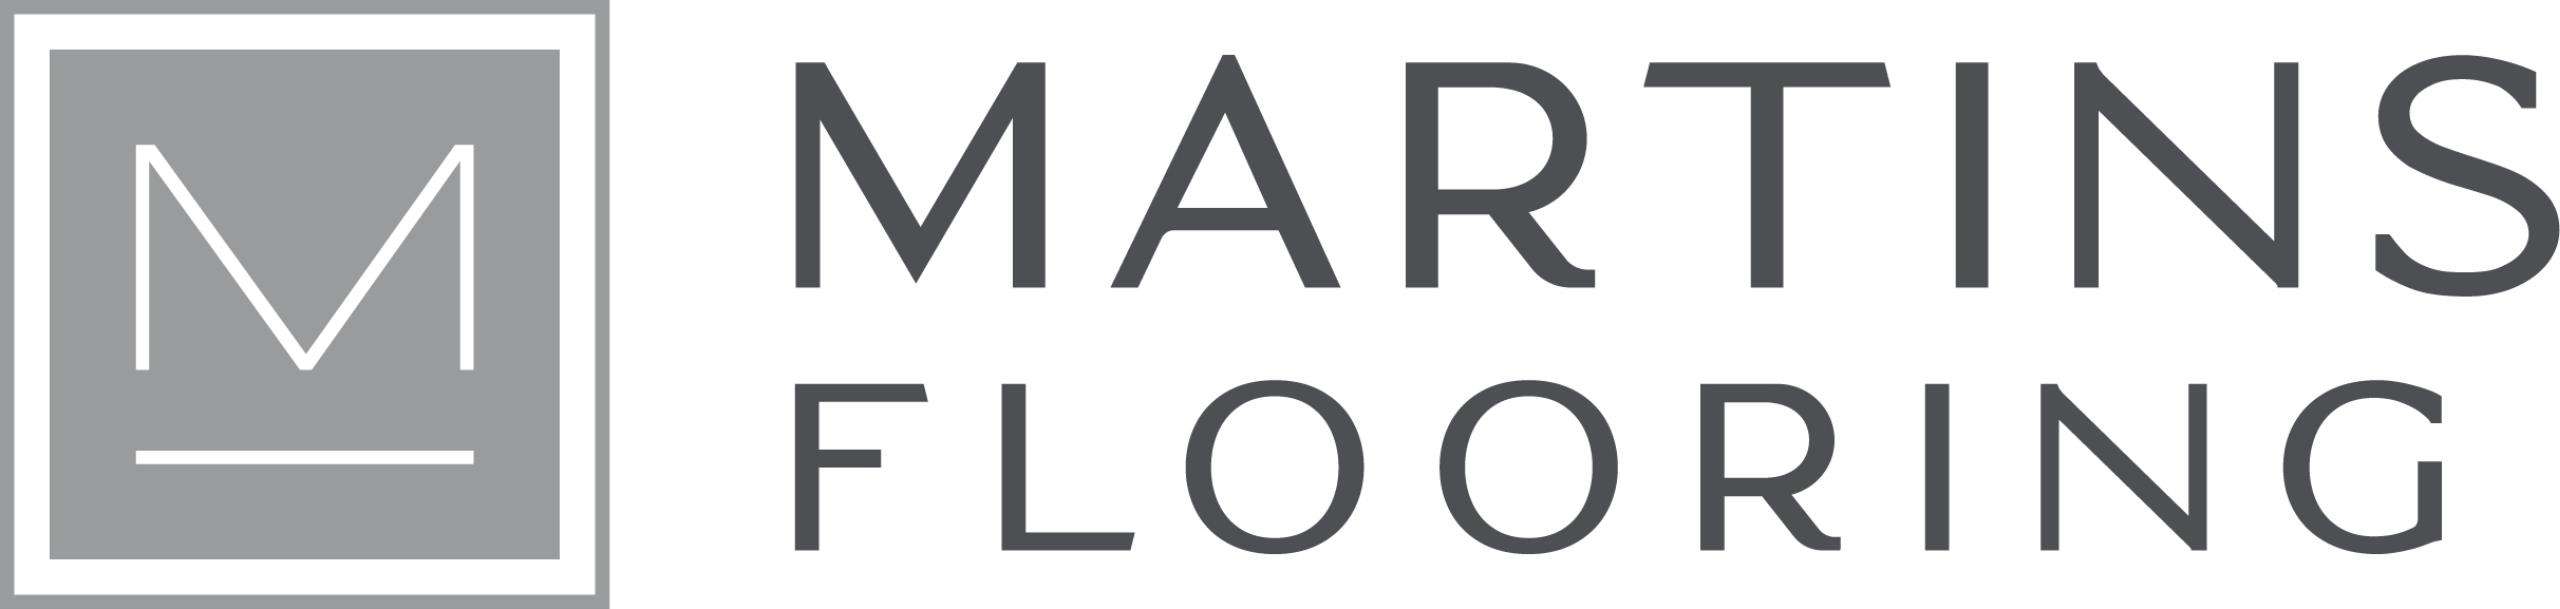 Martin's Flooring, Inc. Logo